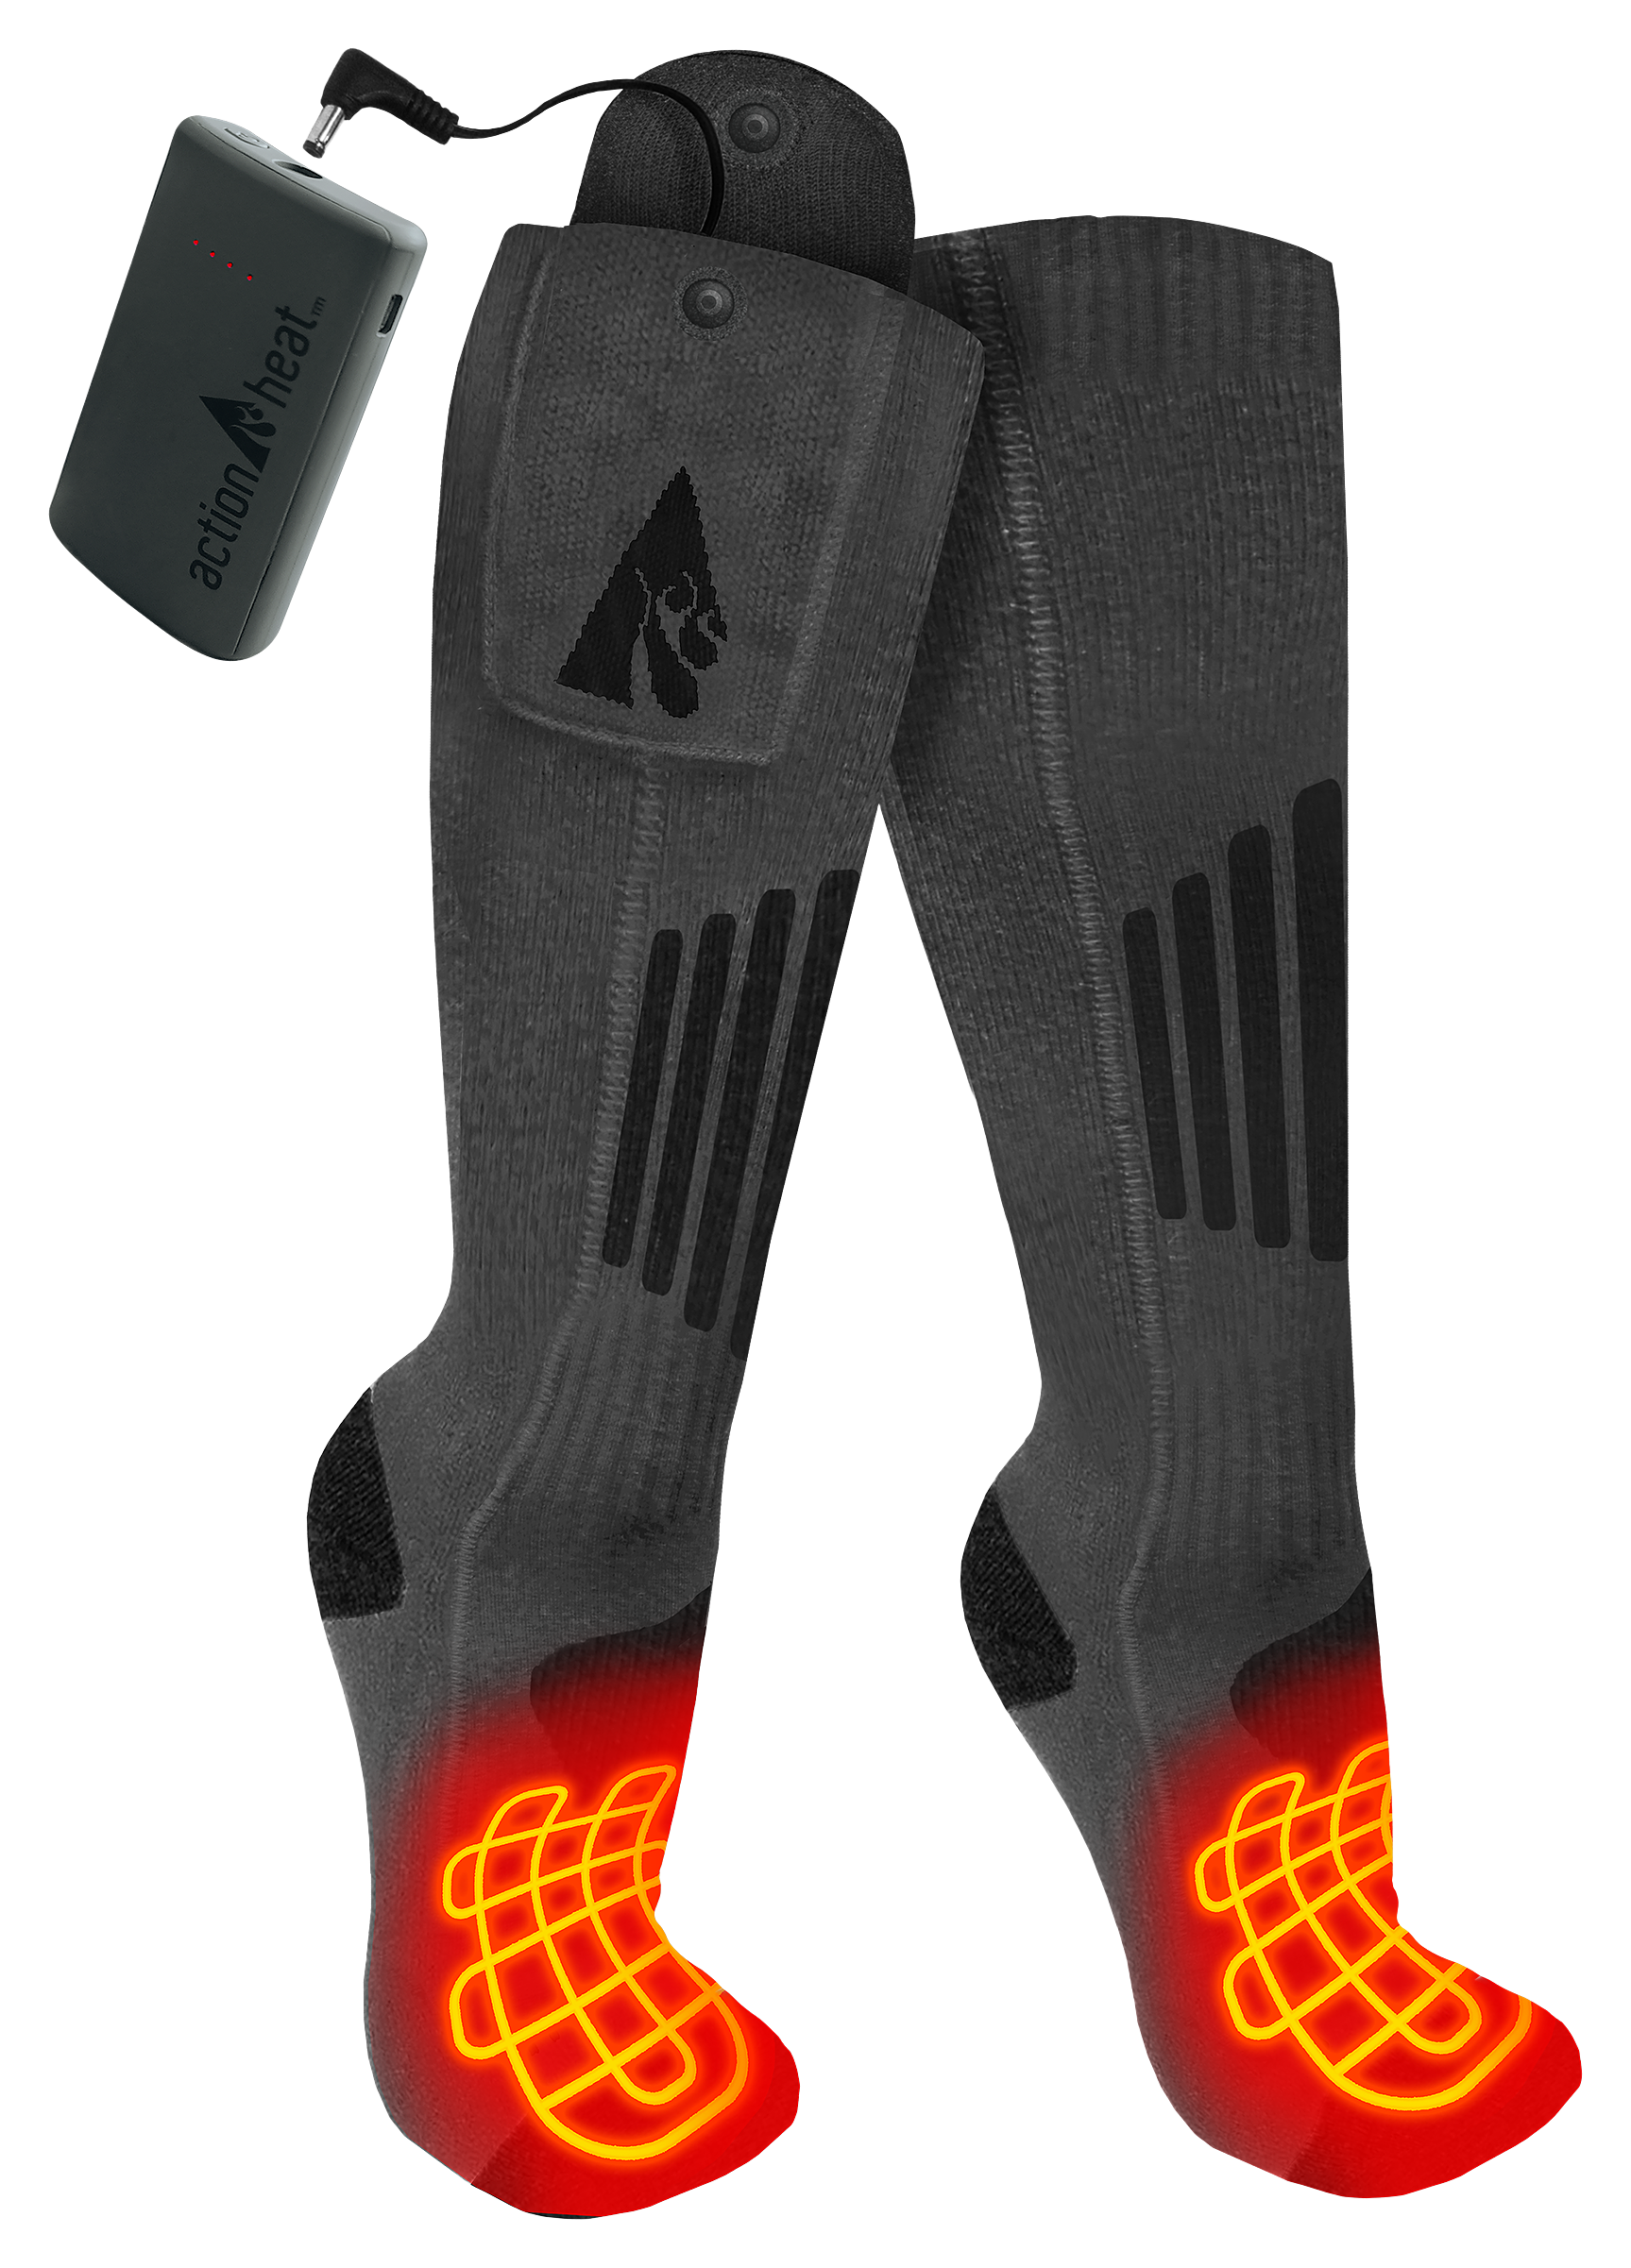 MOBILE-WARMING Premium 2.0 Heated Sock